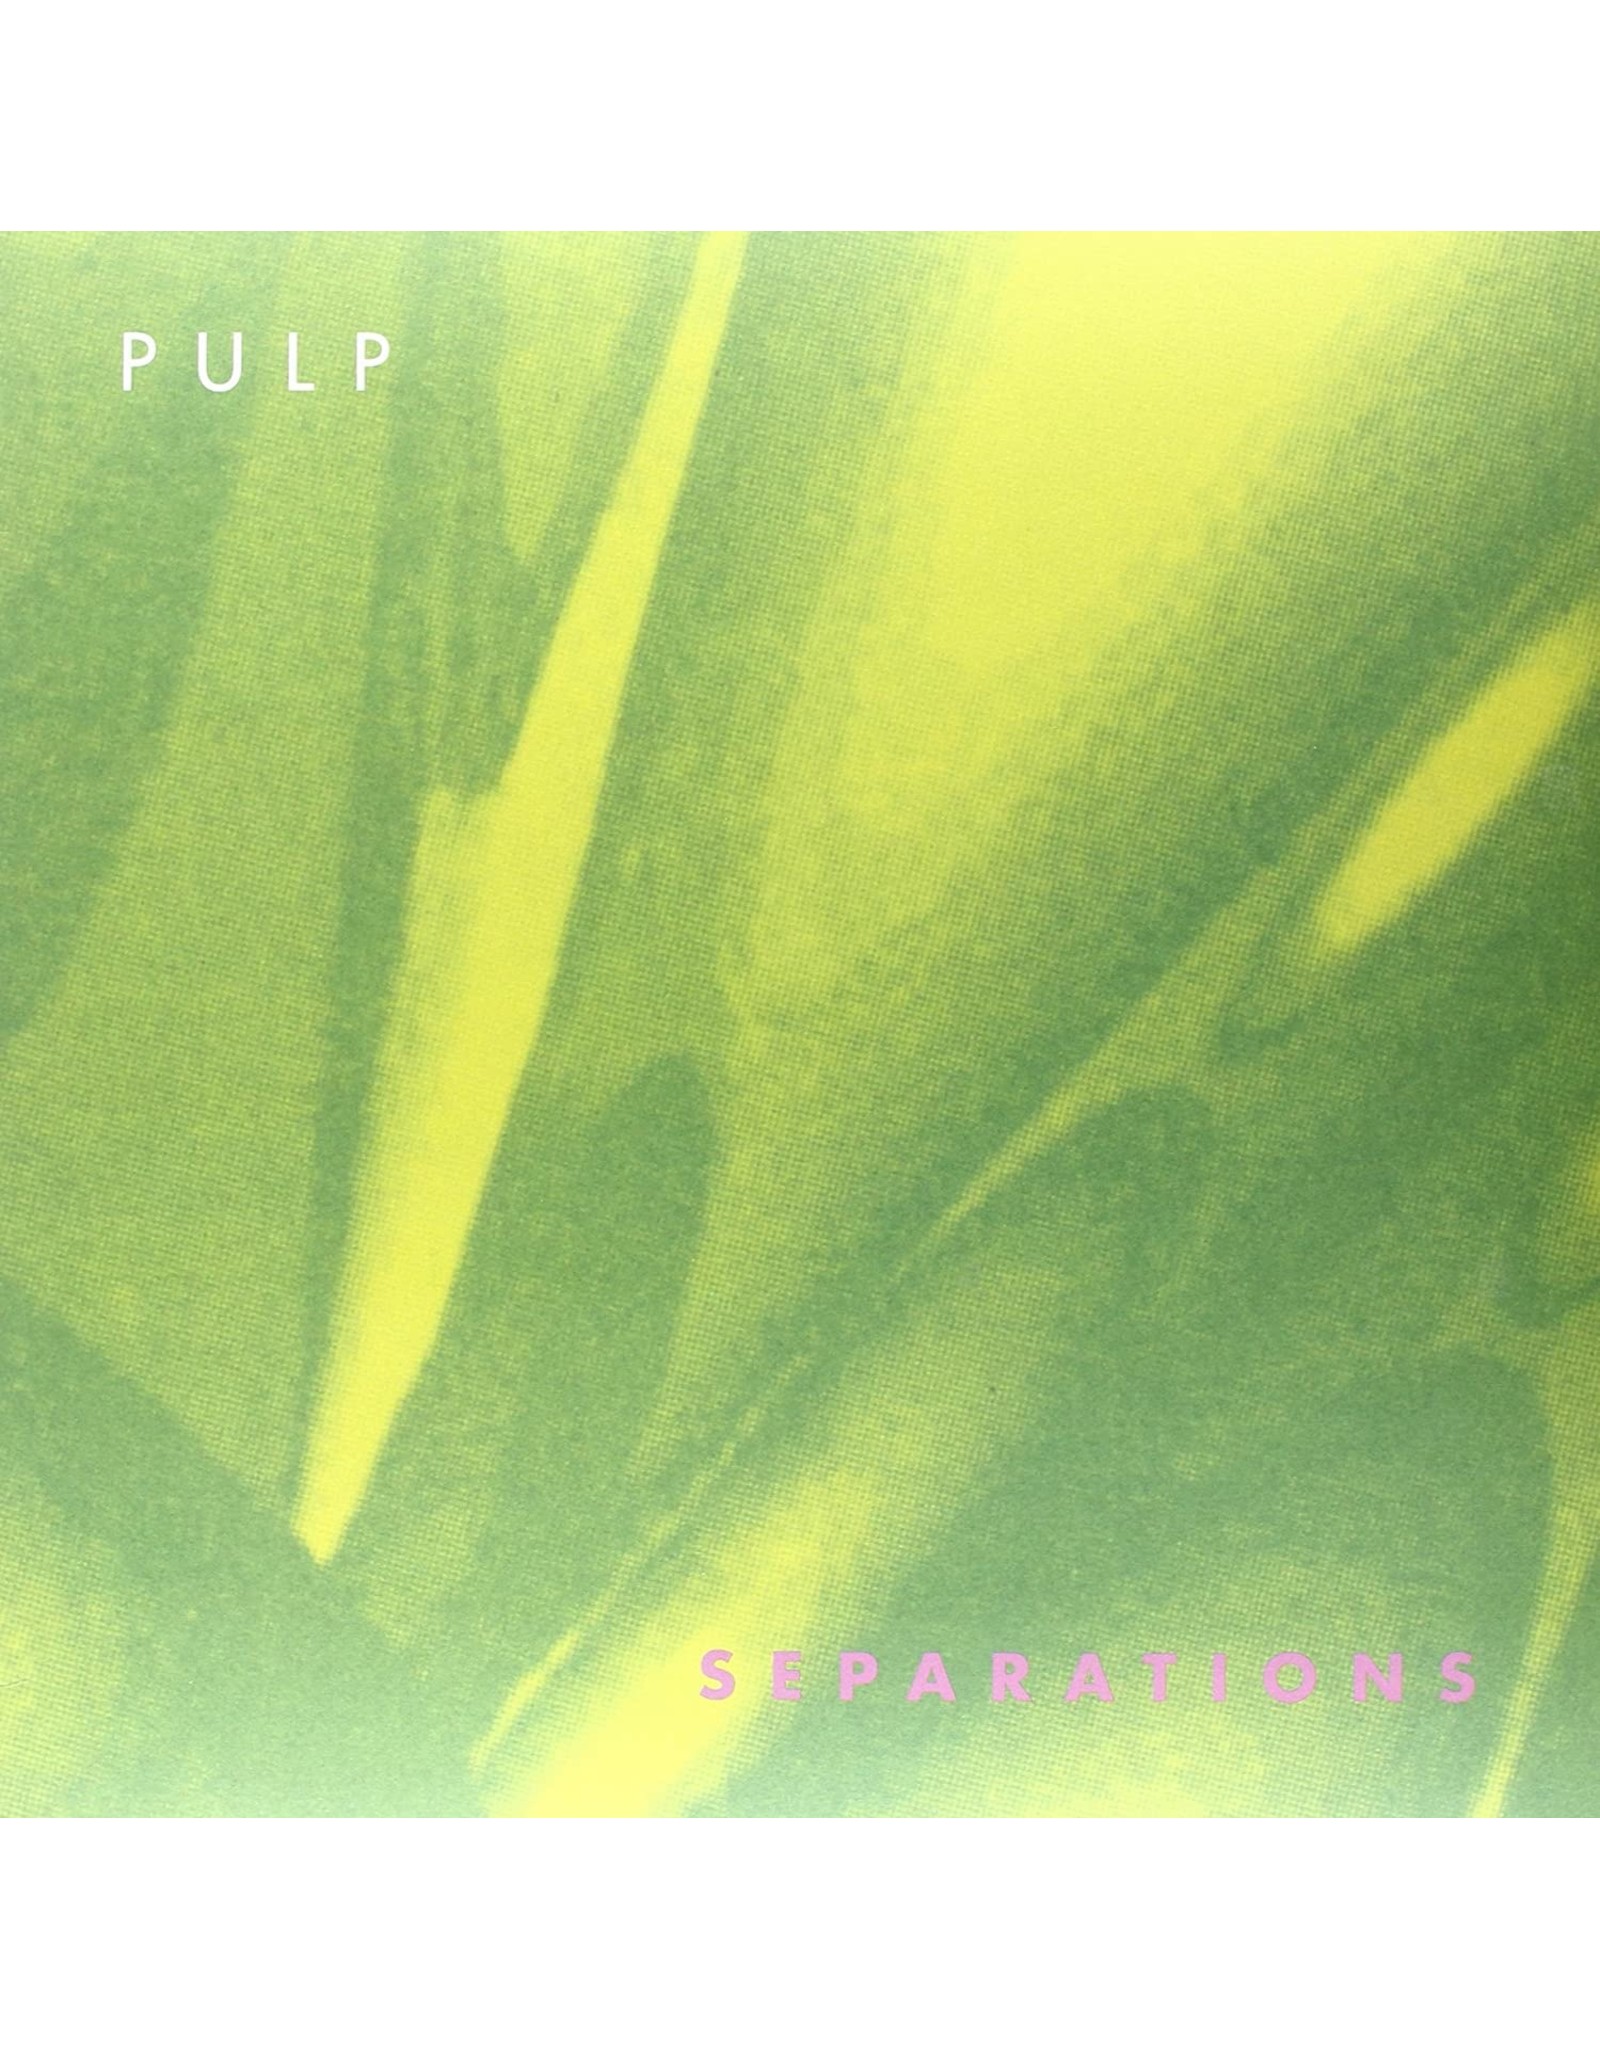 New Vinyl Pulp - Separations LP